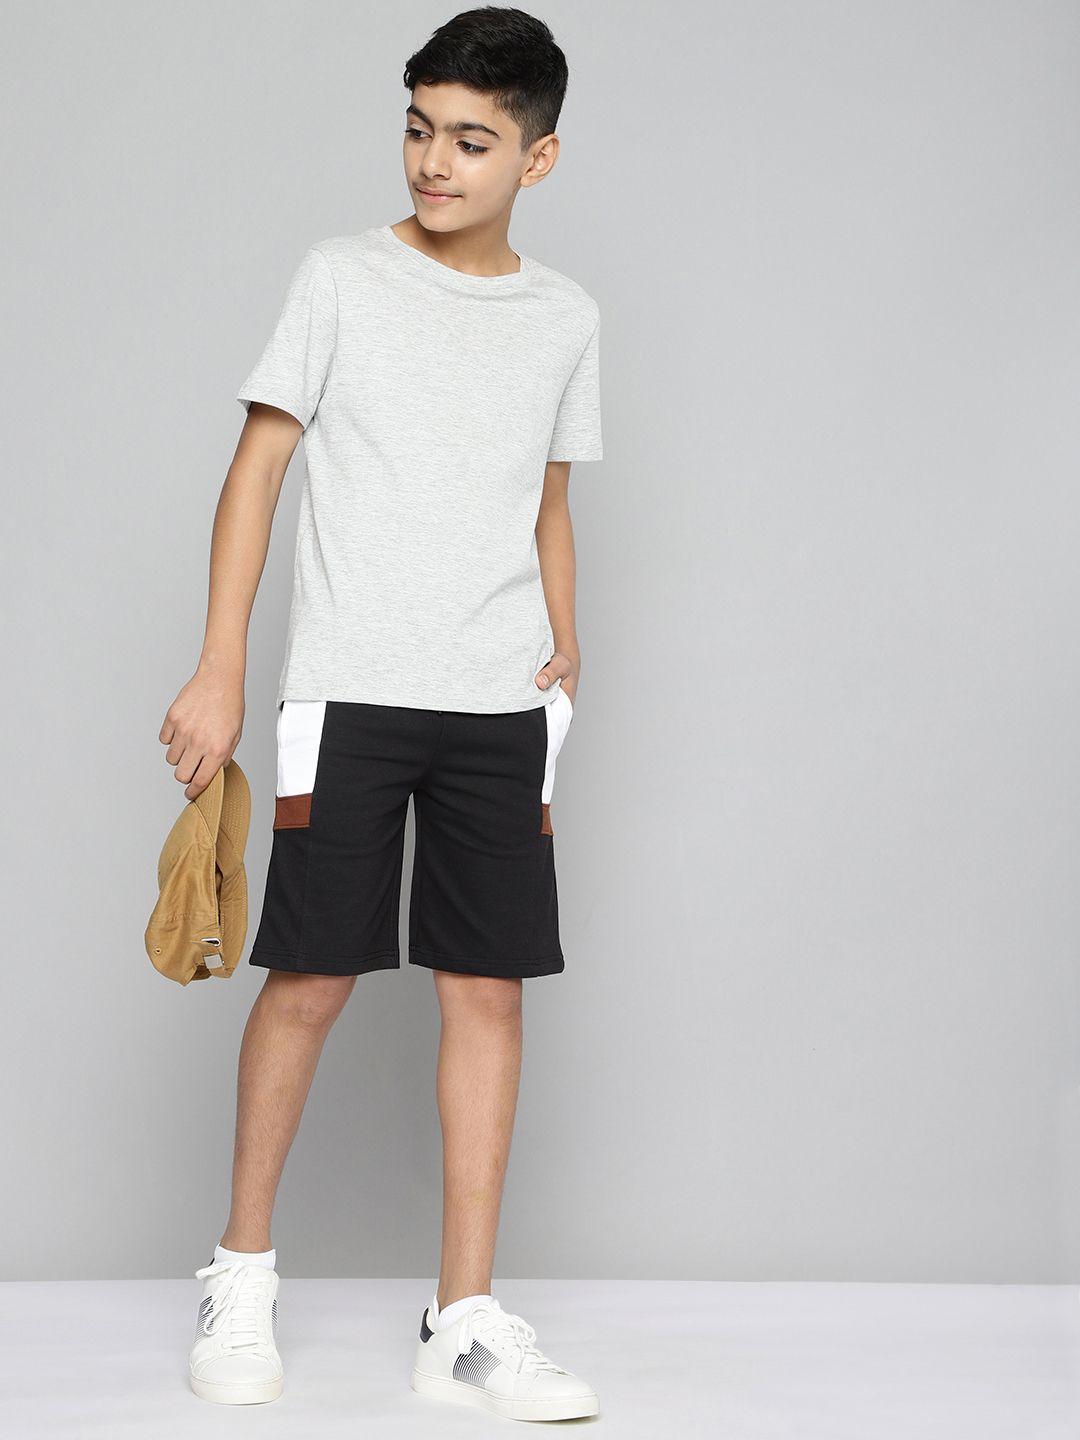 m&h-juniors-boys-black-colourblocked-shorts